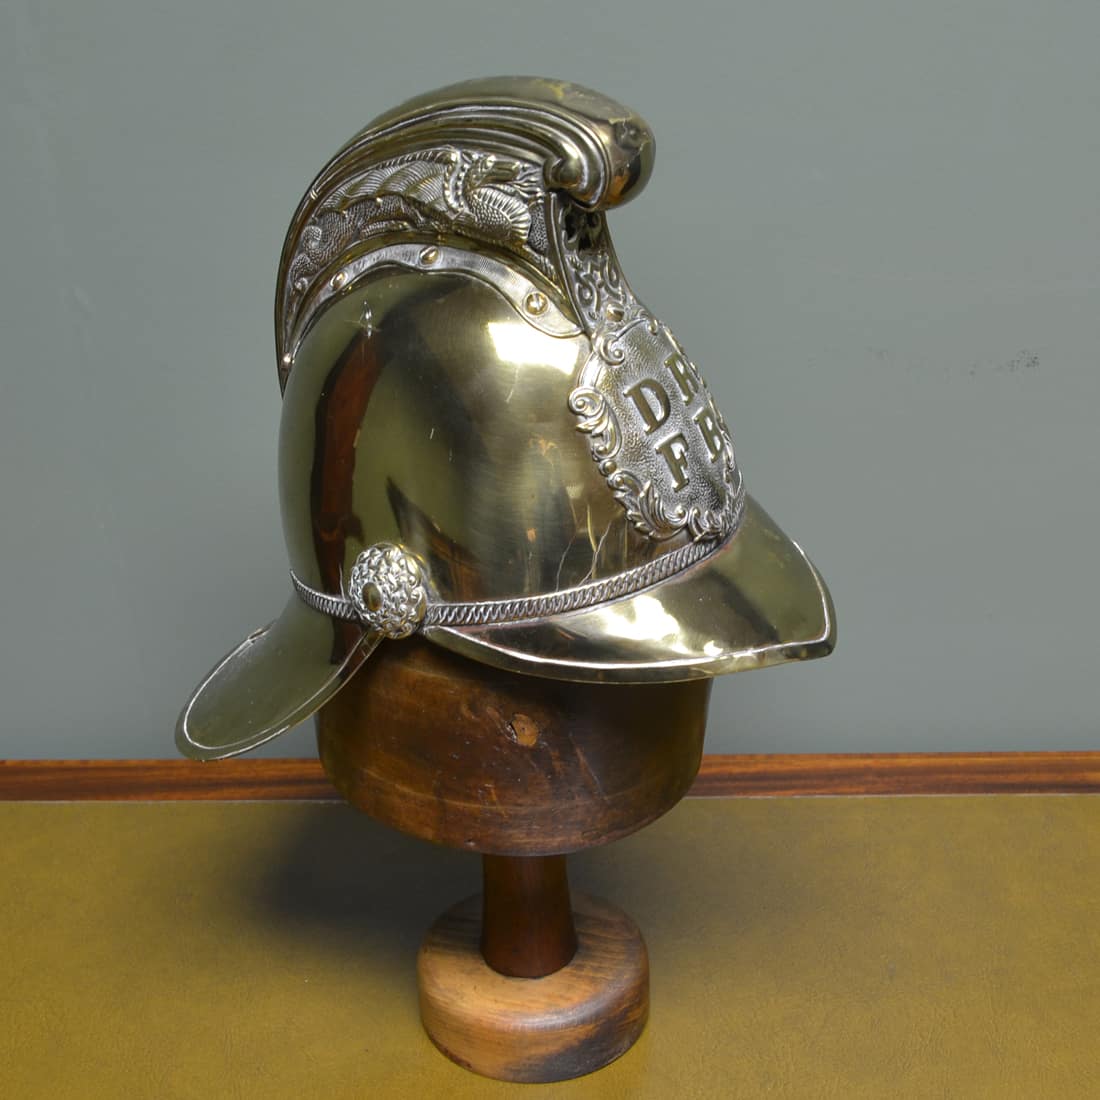 Original 19th Century Brass Decorative Antique Brass Fireman’s Helmet